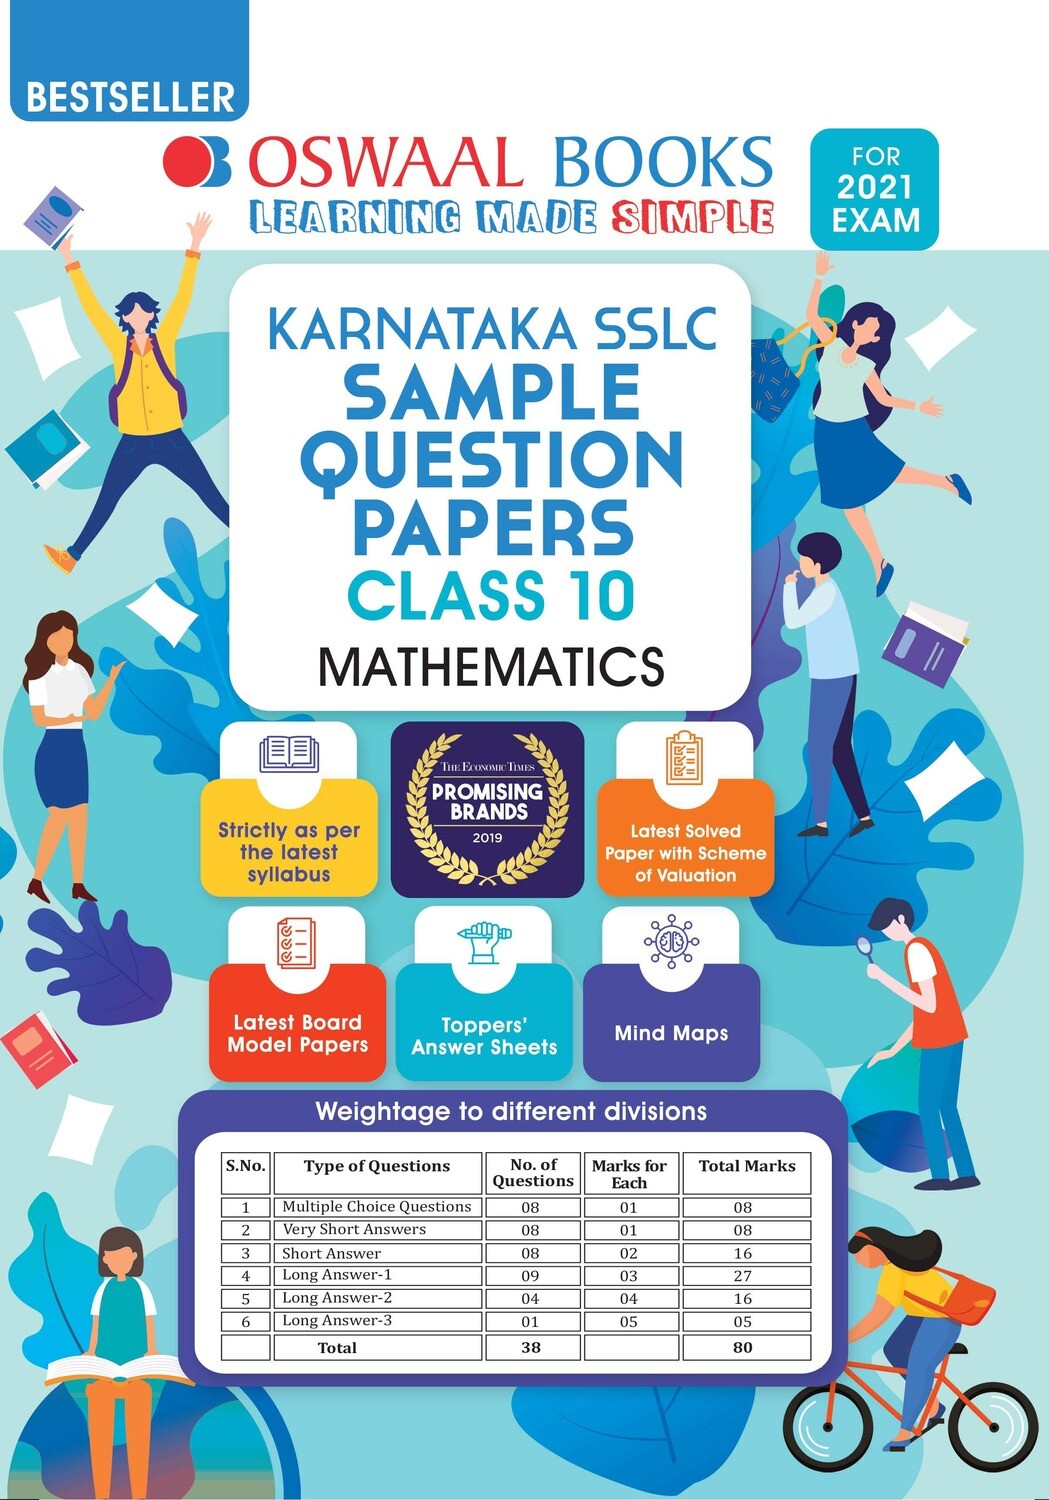 Buy e-book: Oswaal Karnataka SSLC Sample Question Papers Class 10 Mathematics Book (For 2021 Exam)